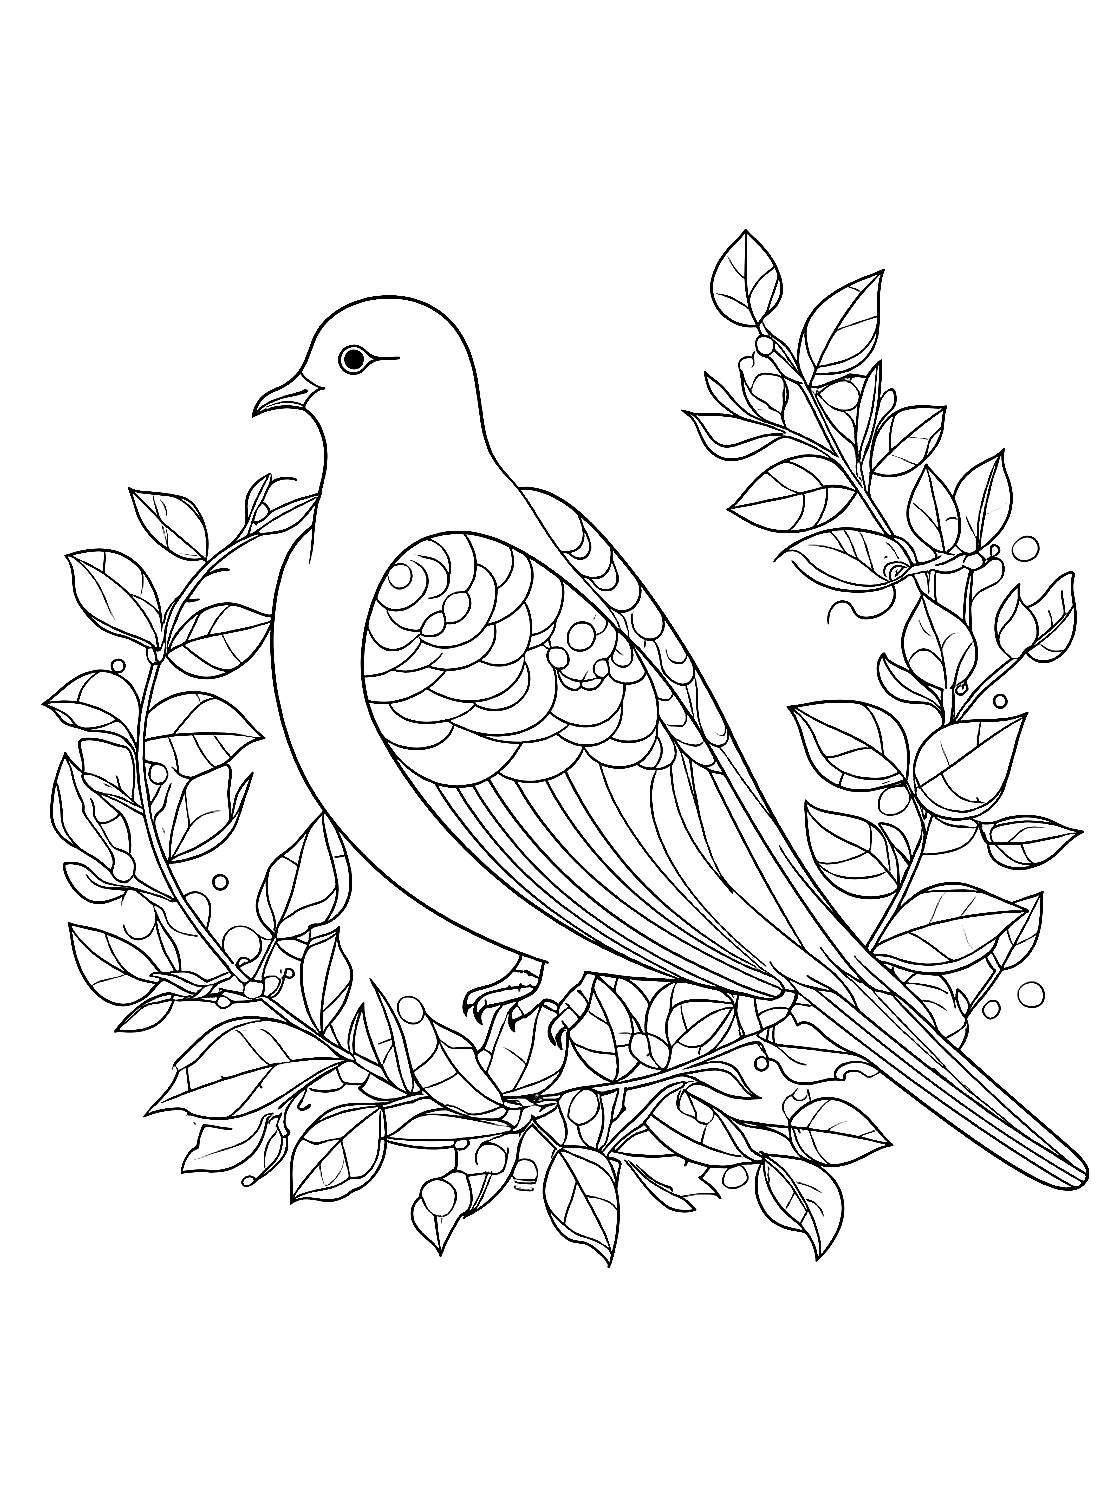 La preciosa paloma de Doves